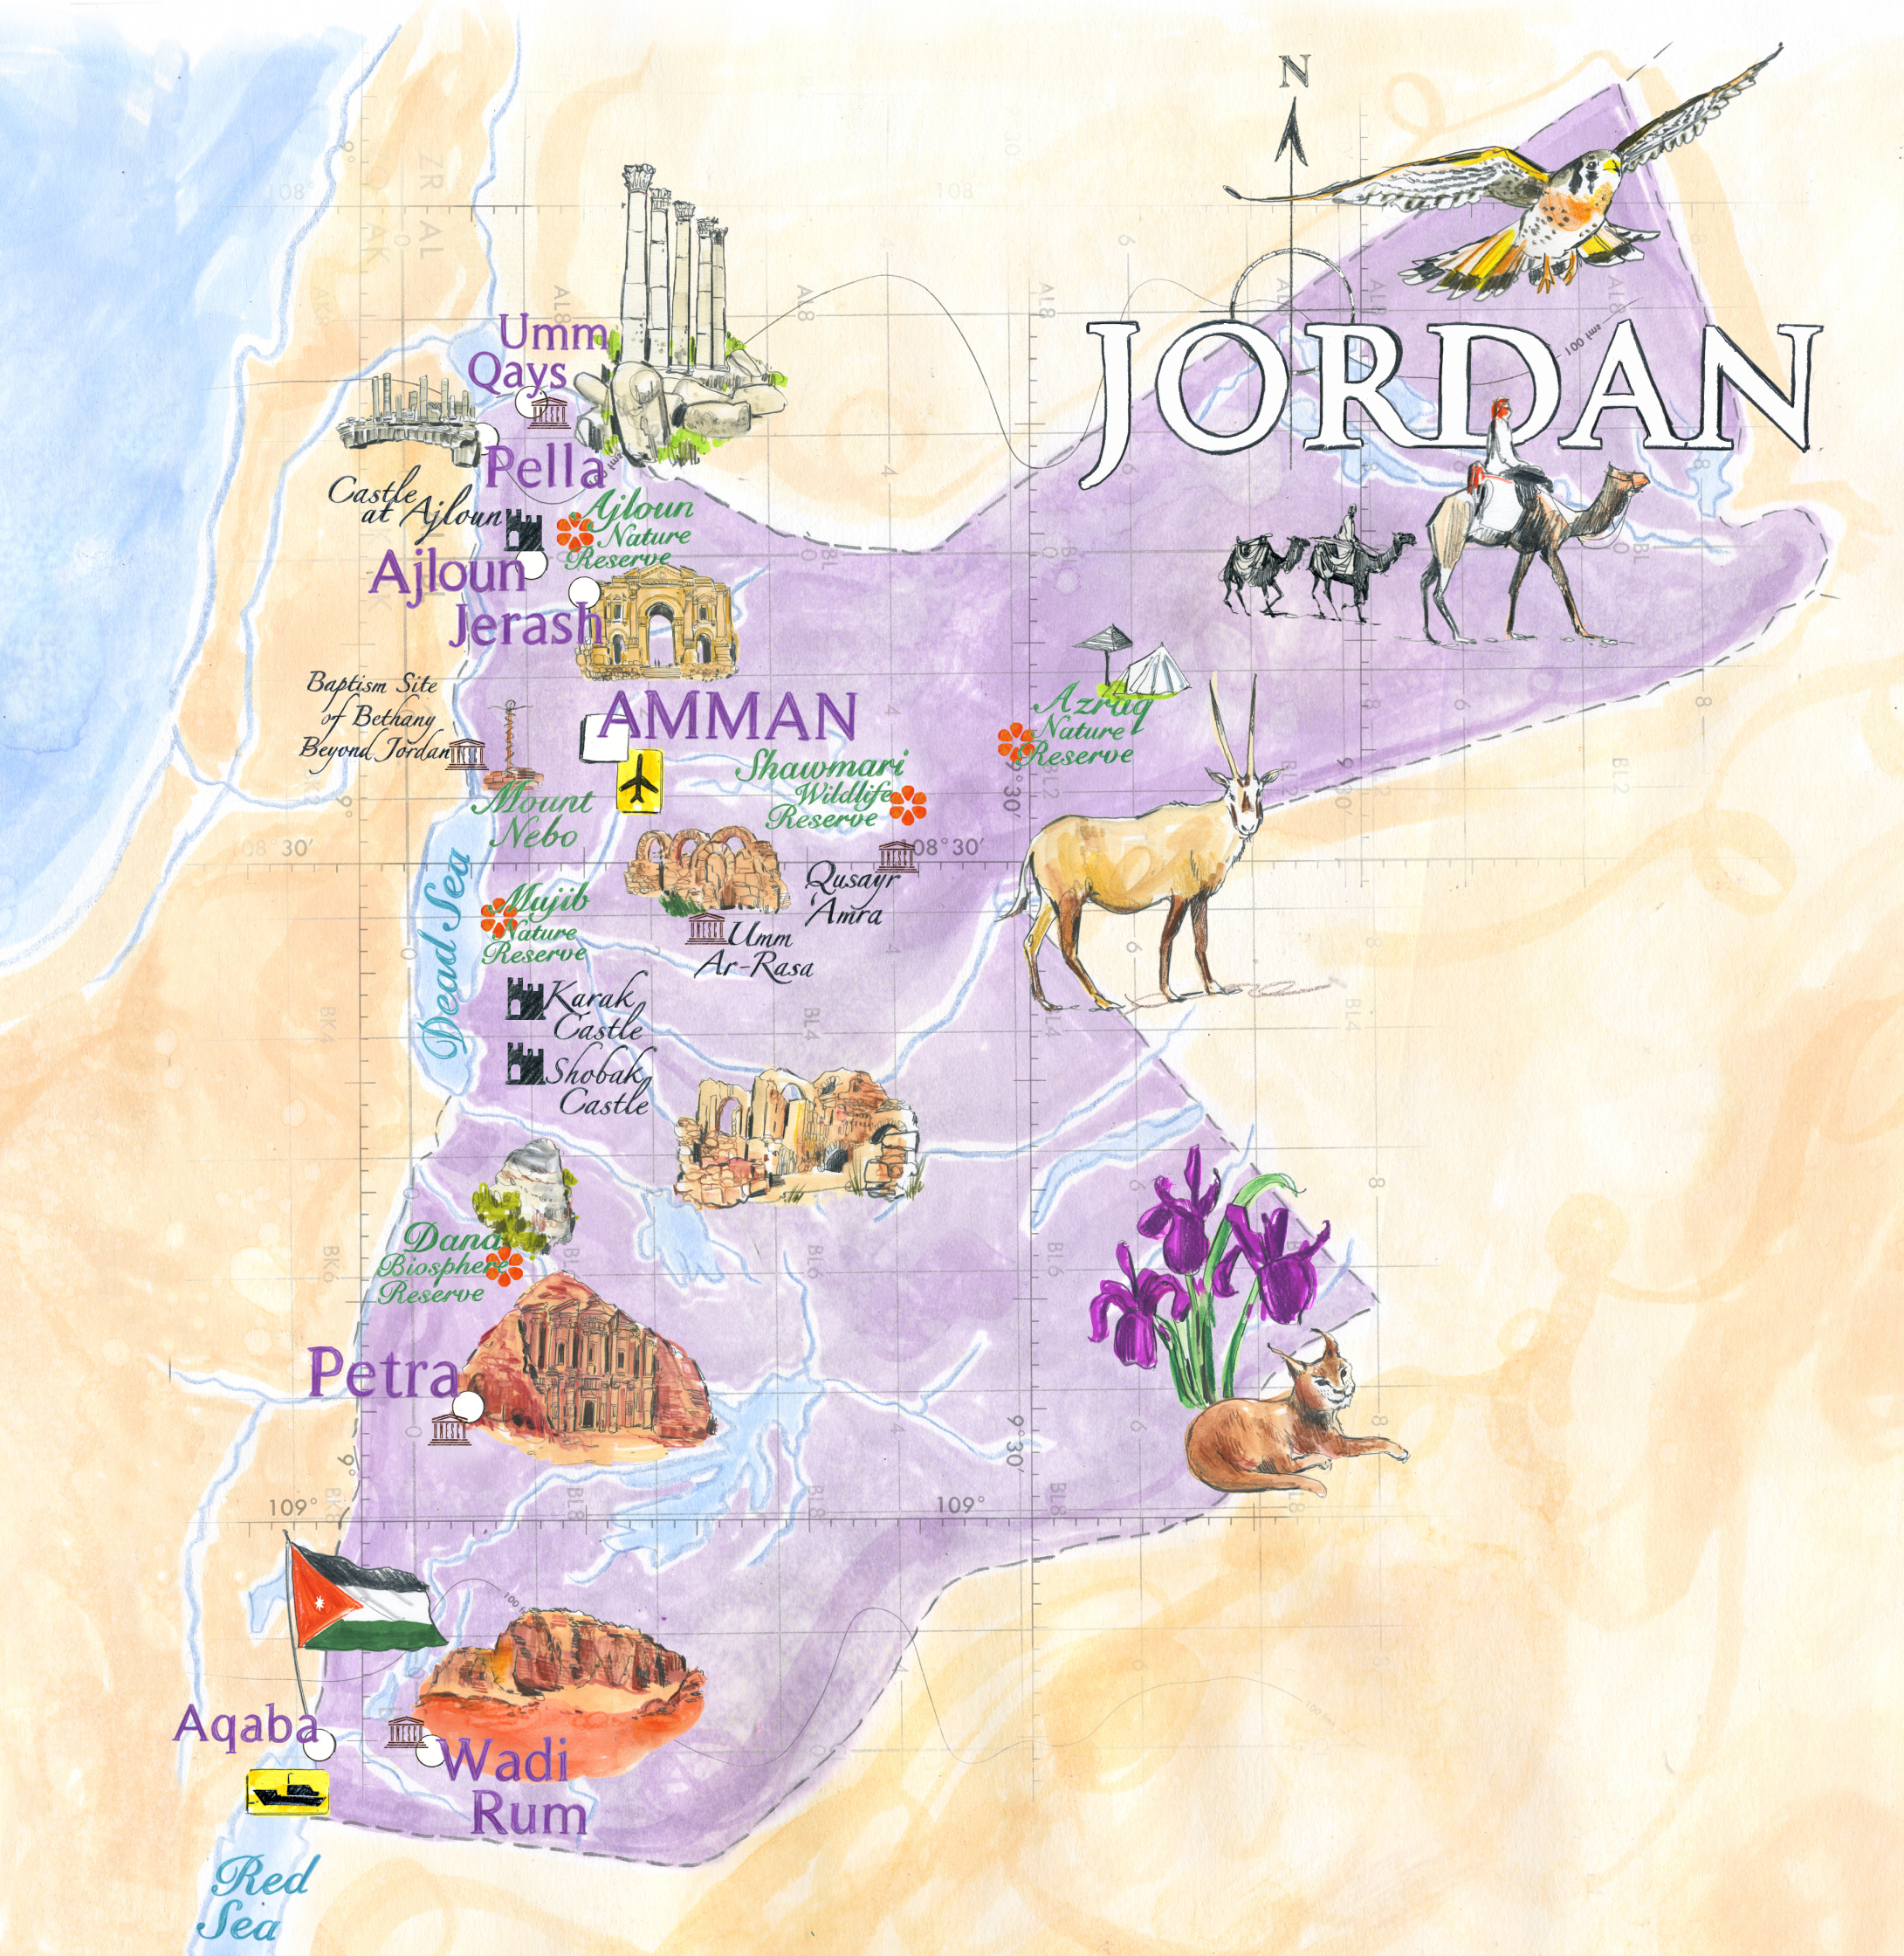 Jordan wrap map cropped.jpg